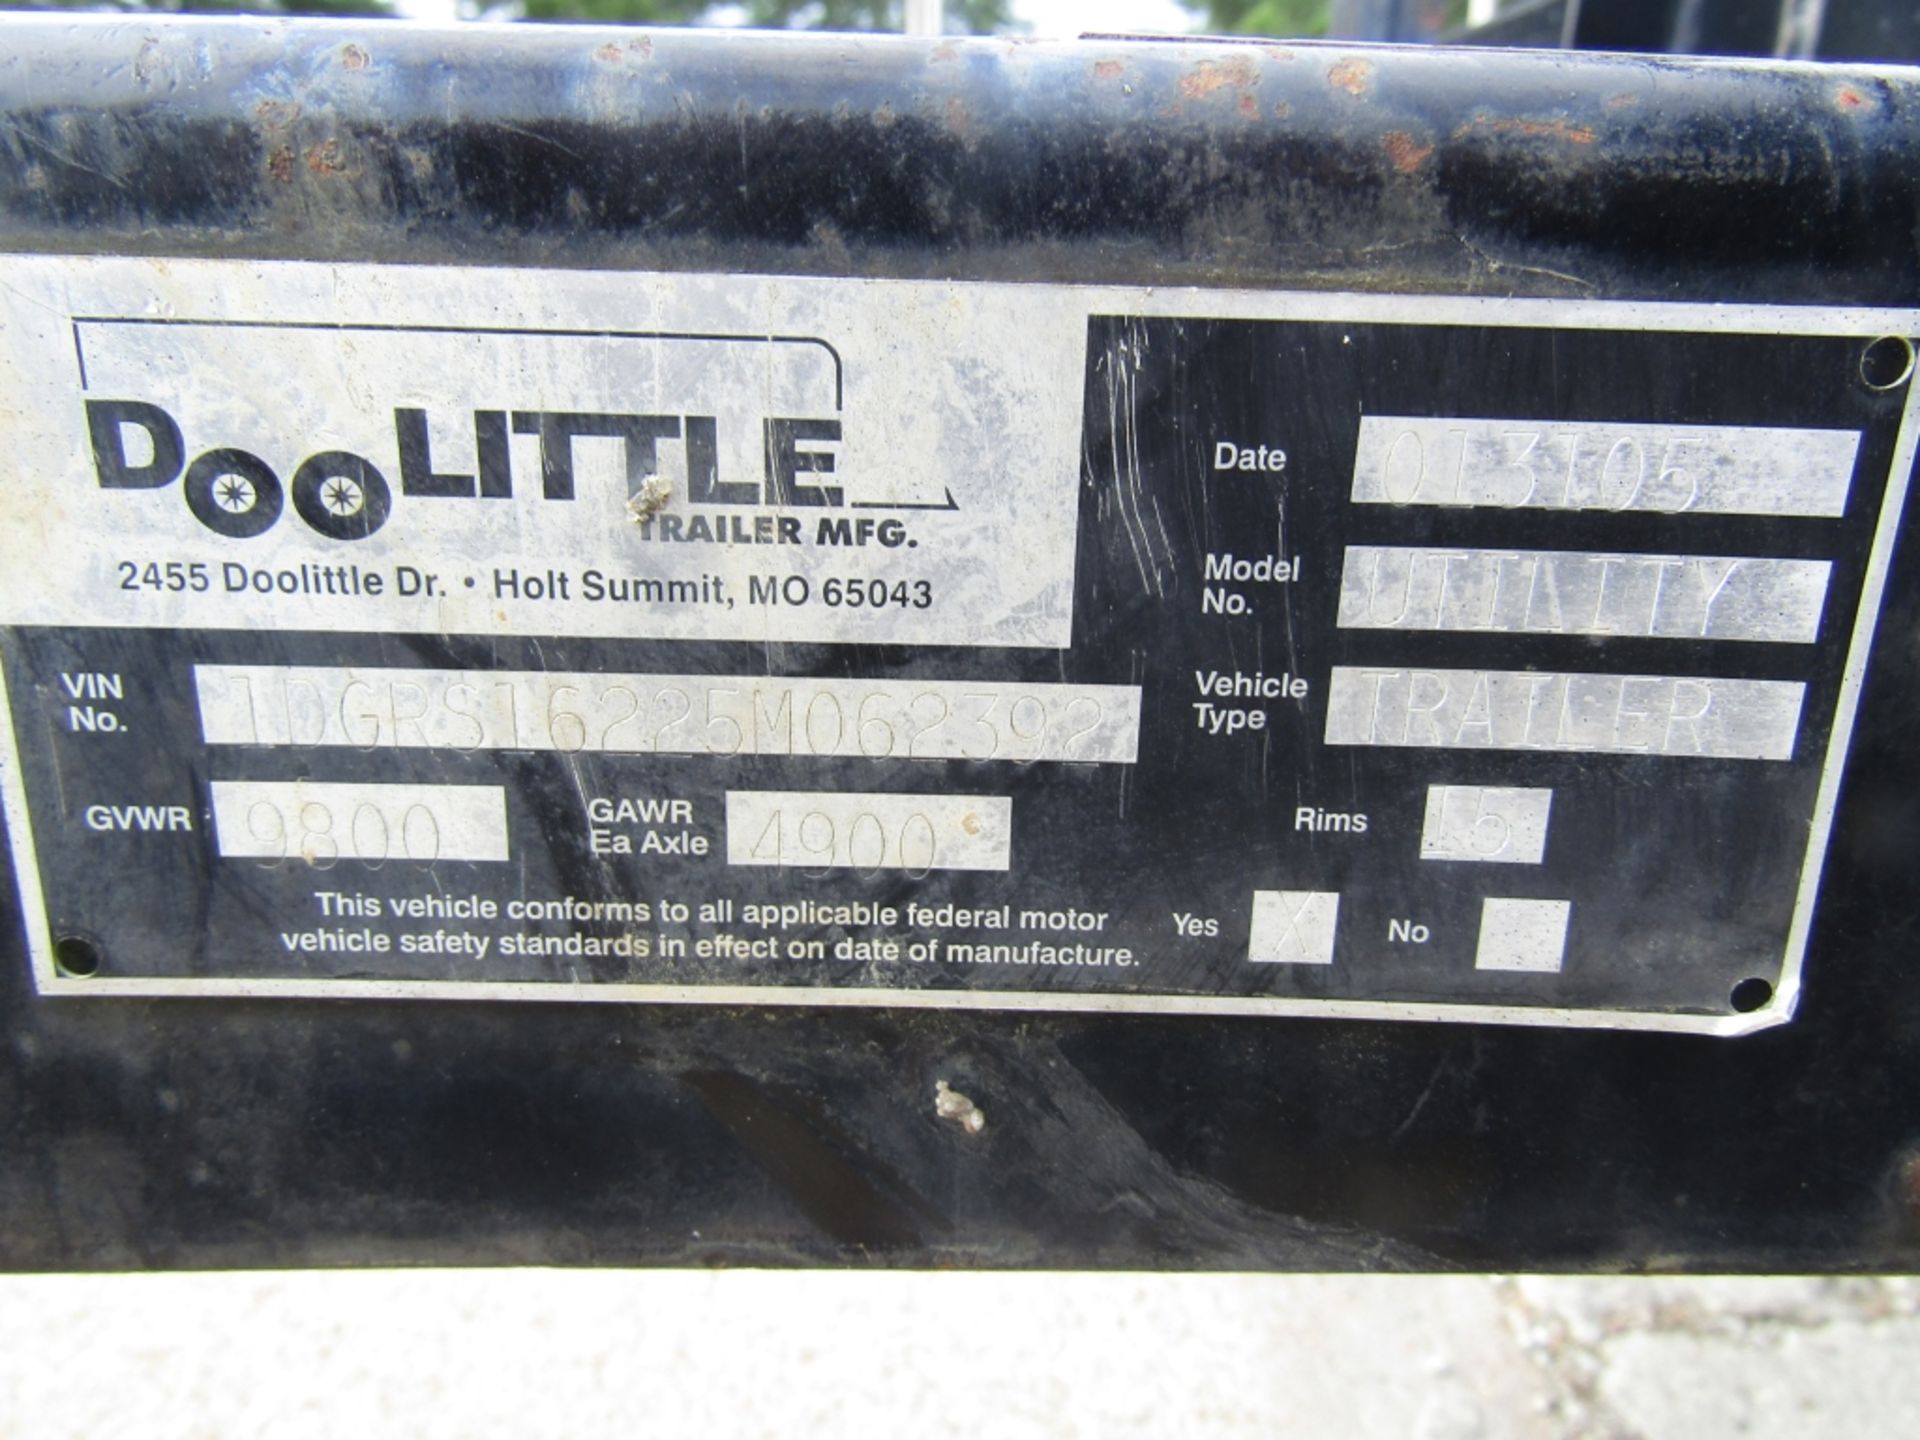 2005 Doolittle 6'5" x16' Trailer Flatbed Trailer Model #Utility, Vin# 1DGRS16225M062392, GVWR 9800# - Image 4 of 8